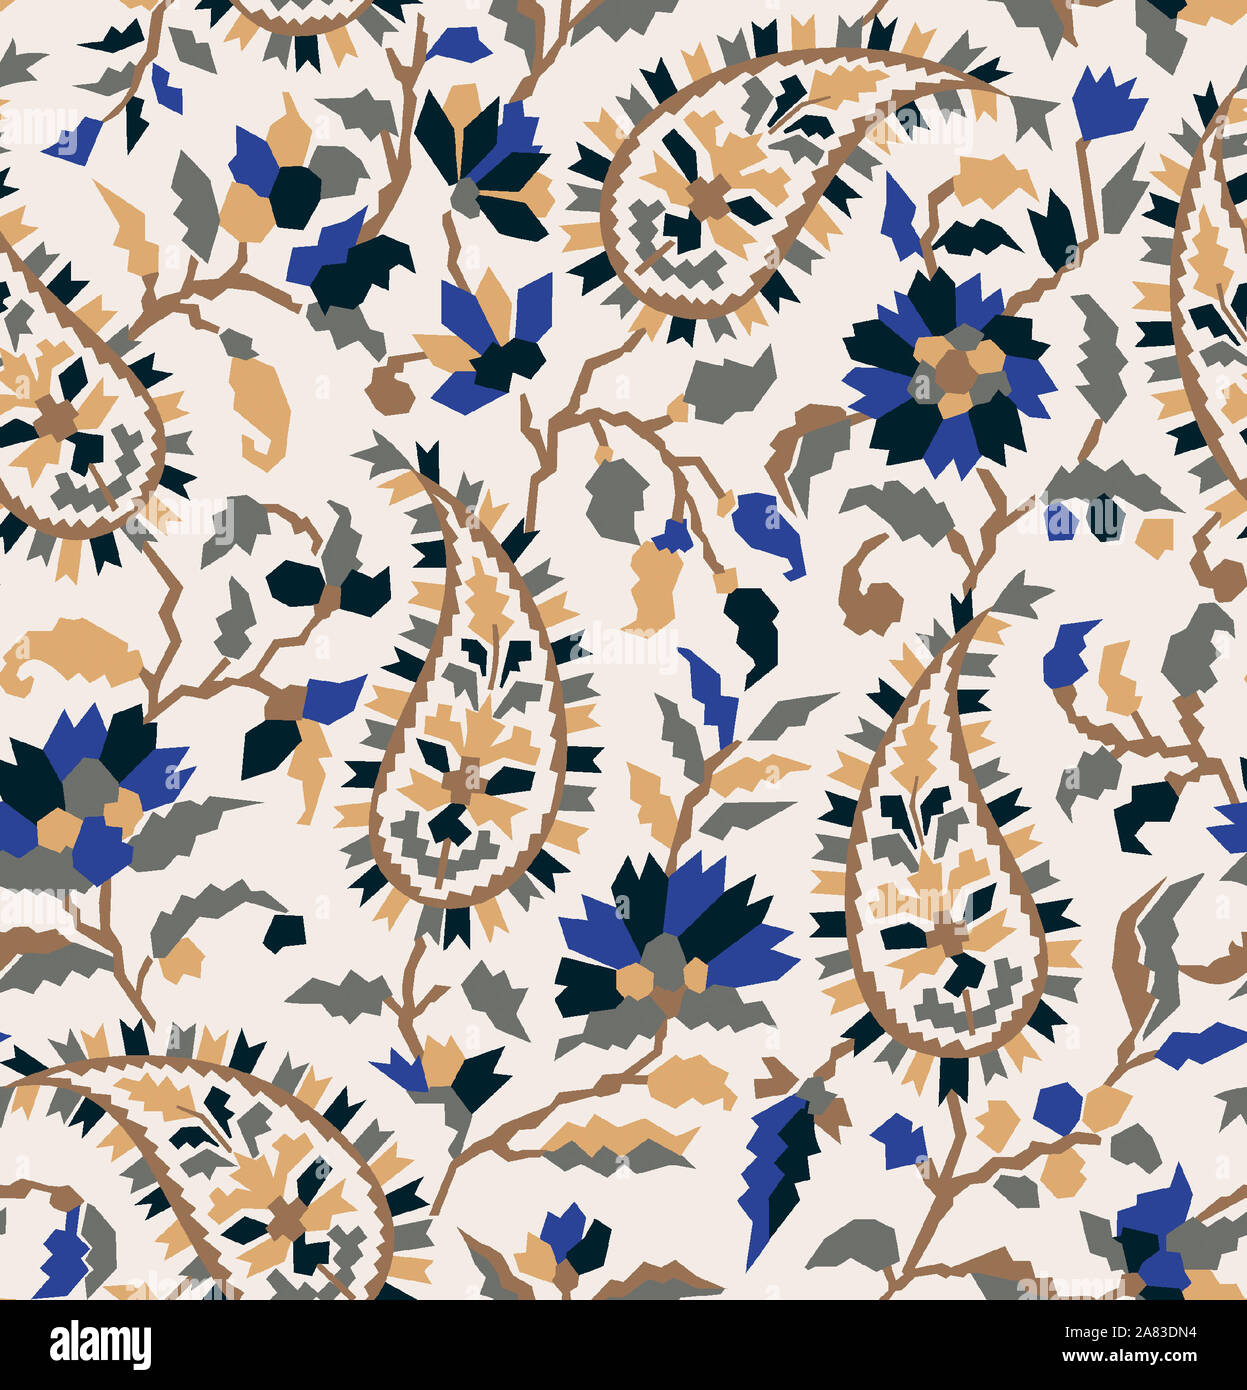 seamless Indian paisley motif background Stock Photo